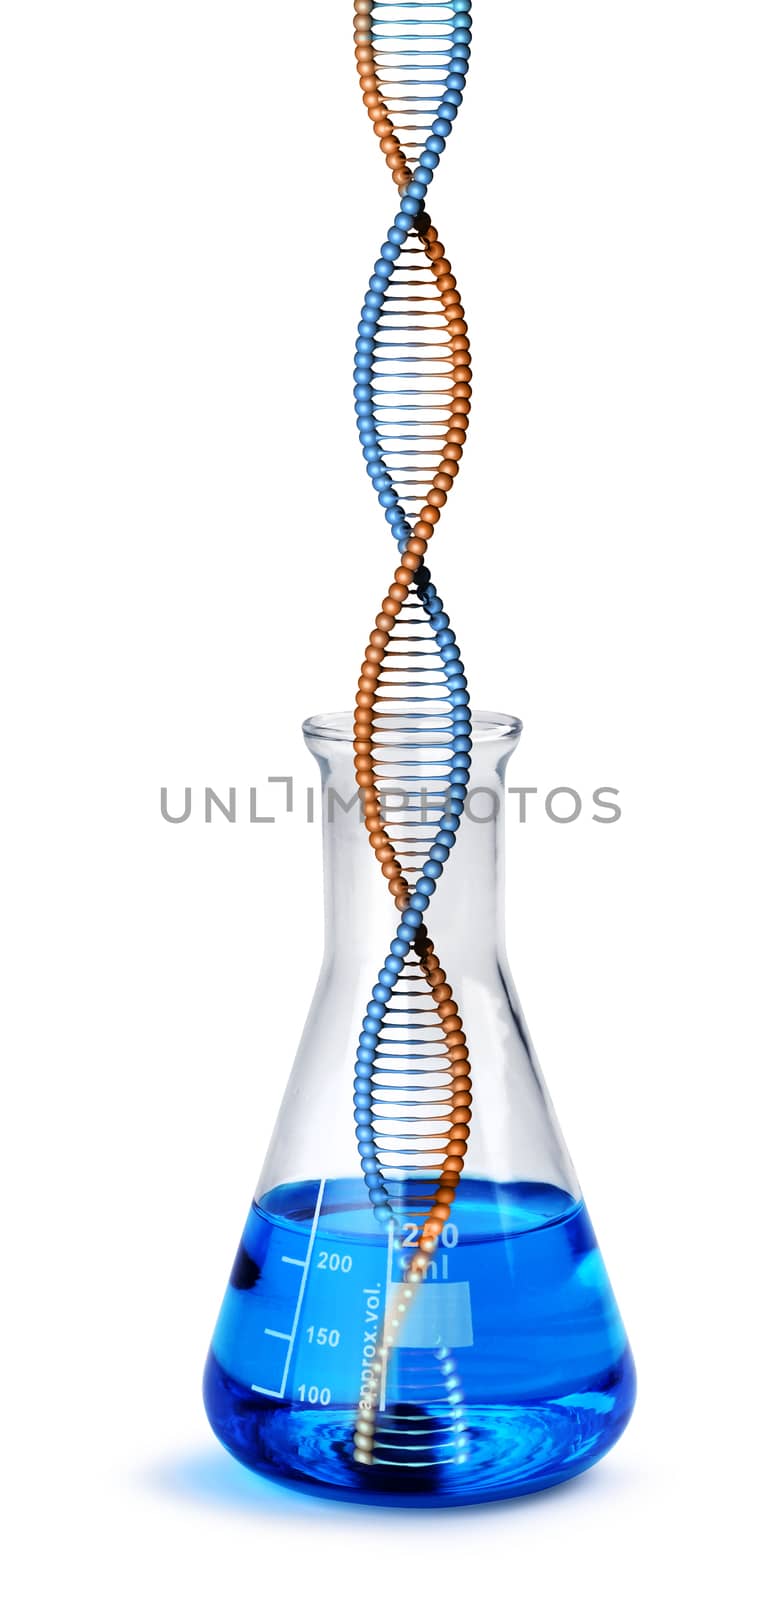 DNA helix growing from labotatory test tube glass beaker